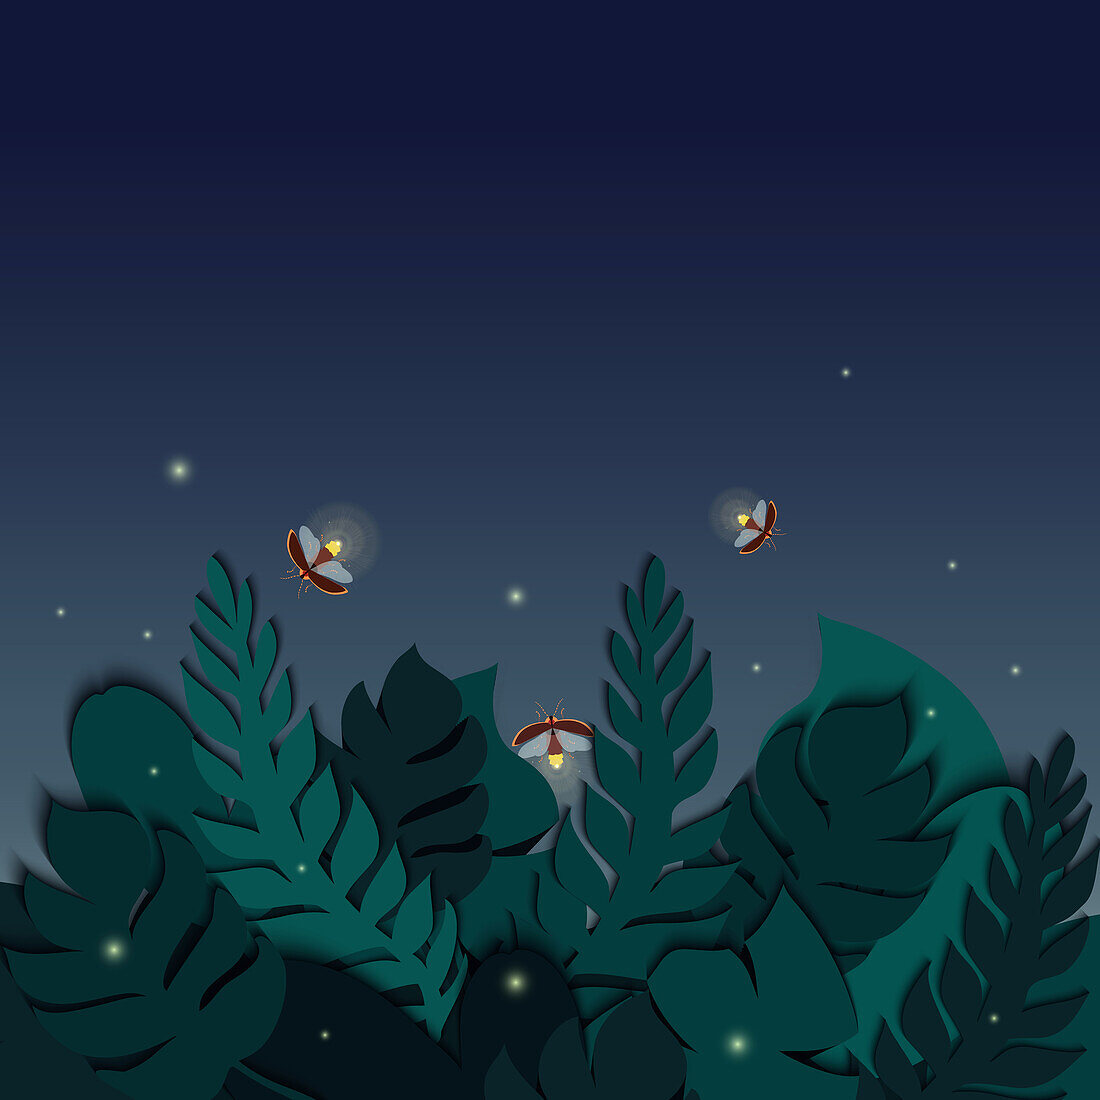 Fireflies flashing at night, illustration